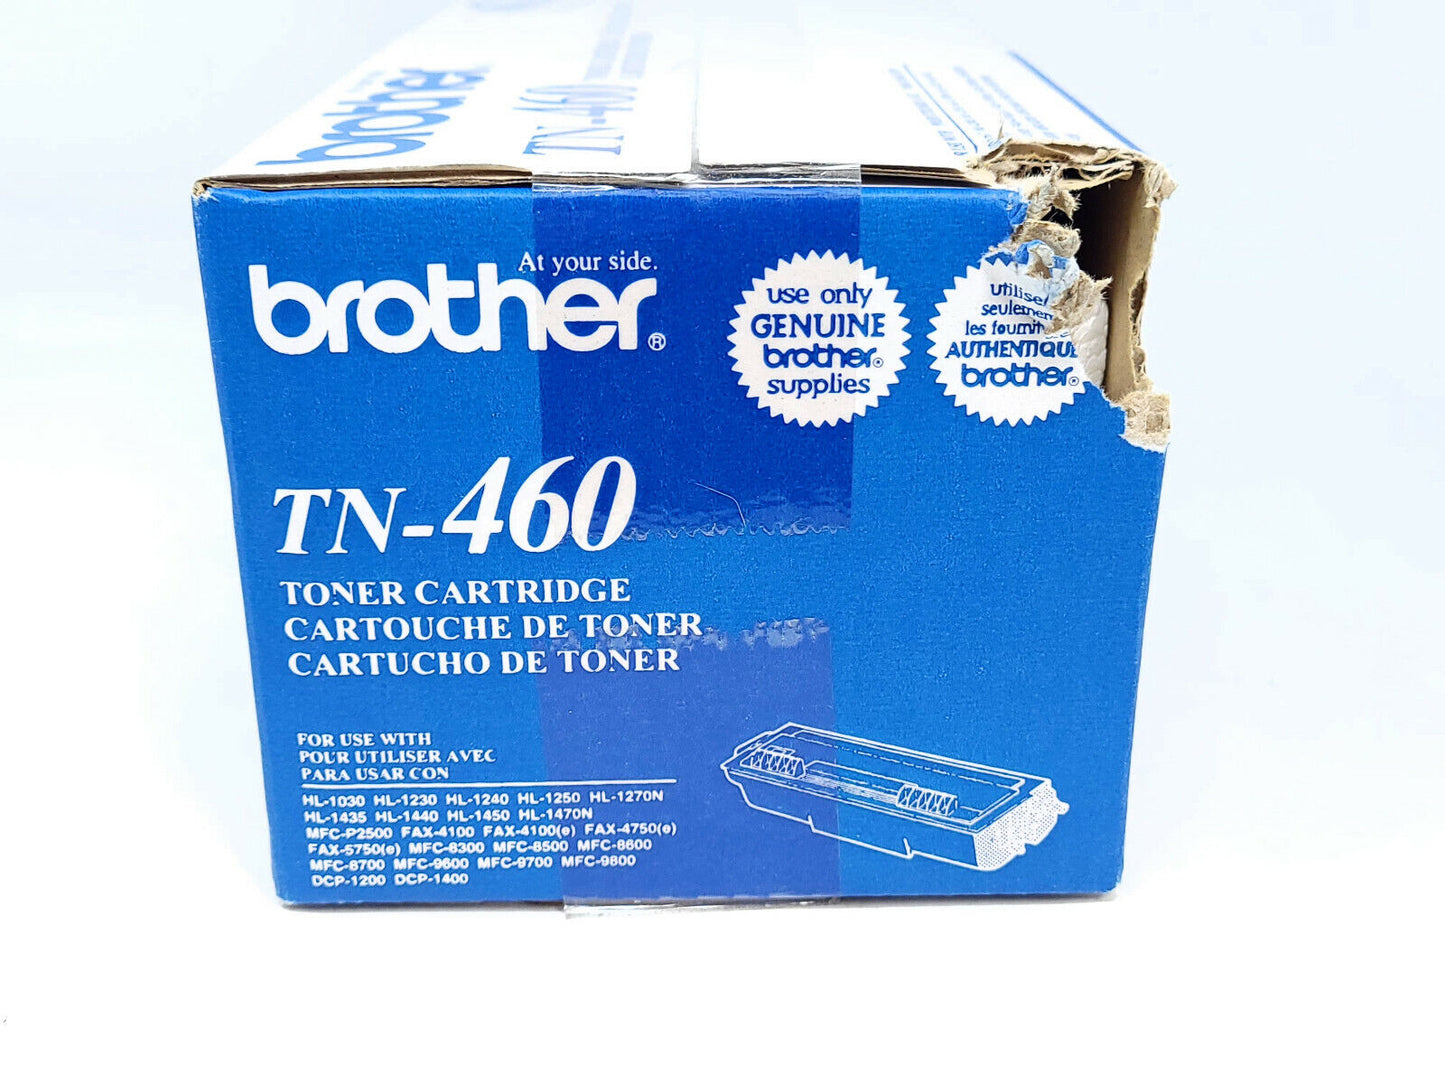 Brother TN-460 High Yield Black Toner Cartridge New In Box - Damage on Box